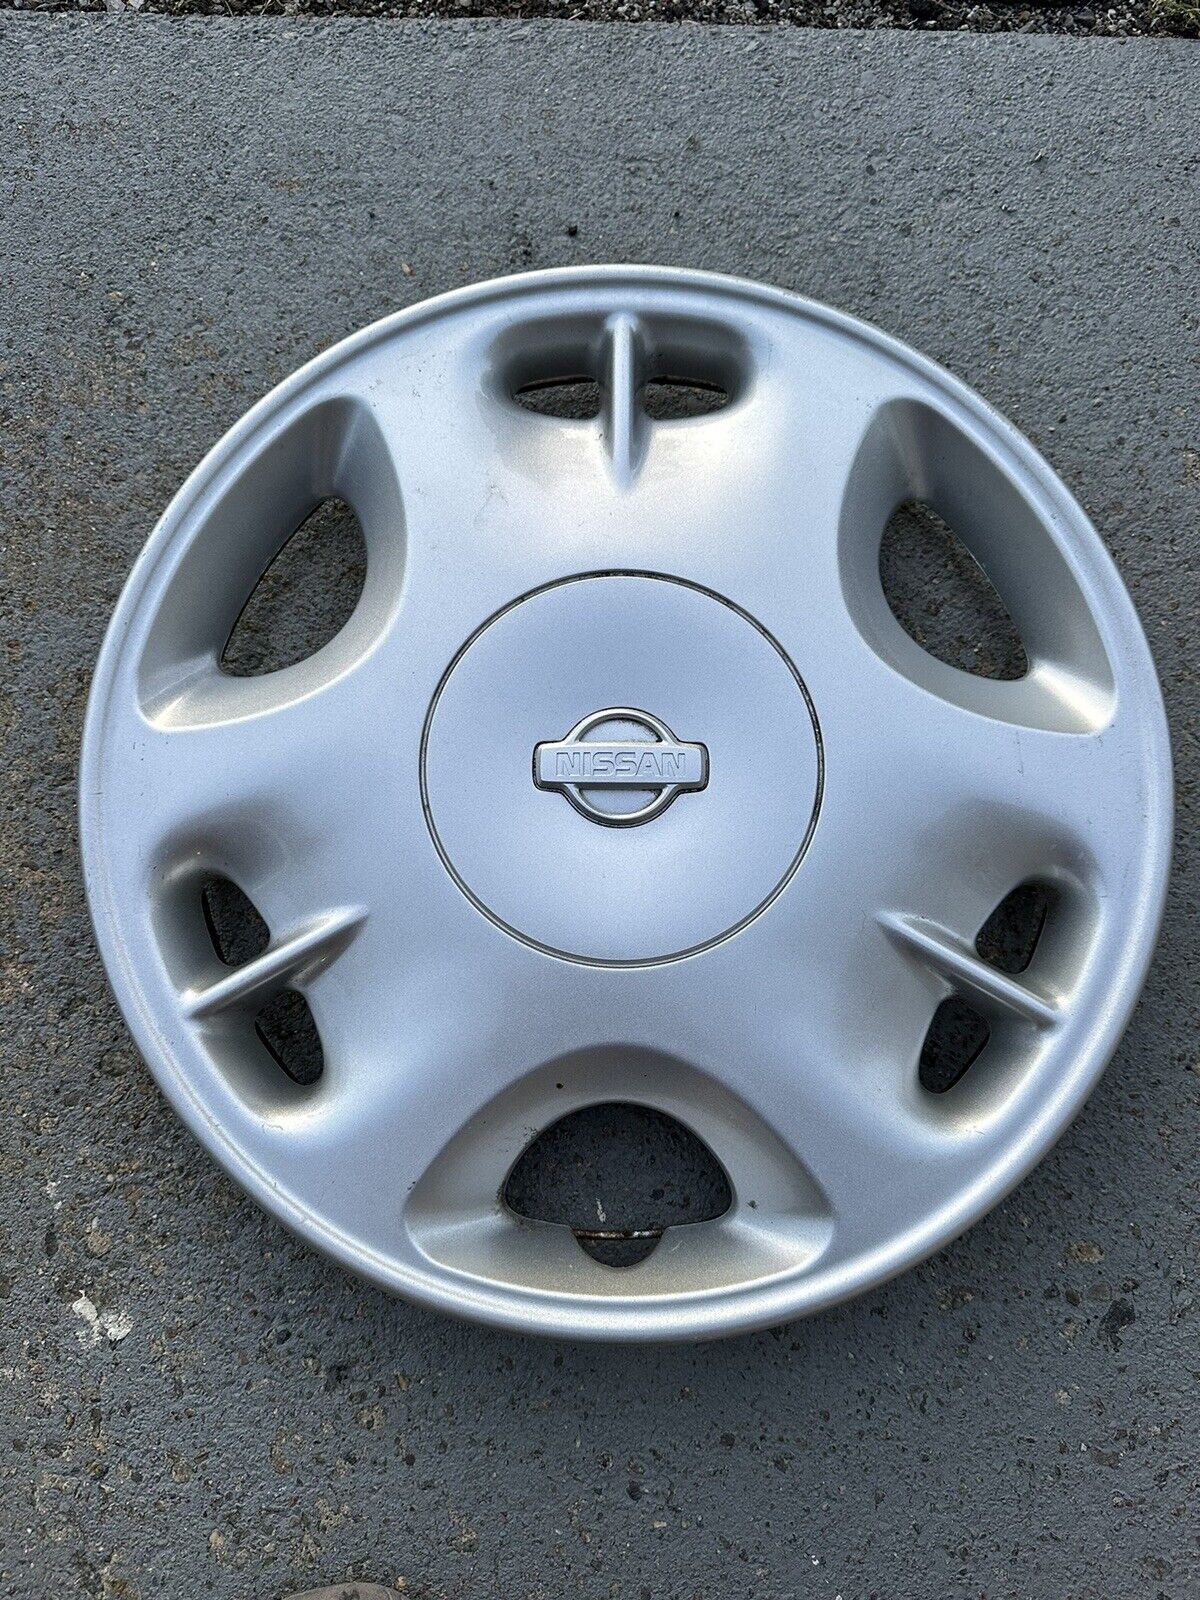 99-01 Nissan Quest 15” Hubcap Wheel Cover 40215-7B200 OEM 99 00 01